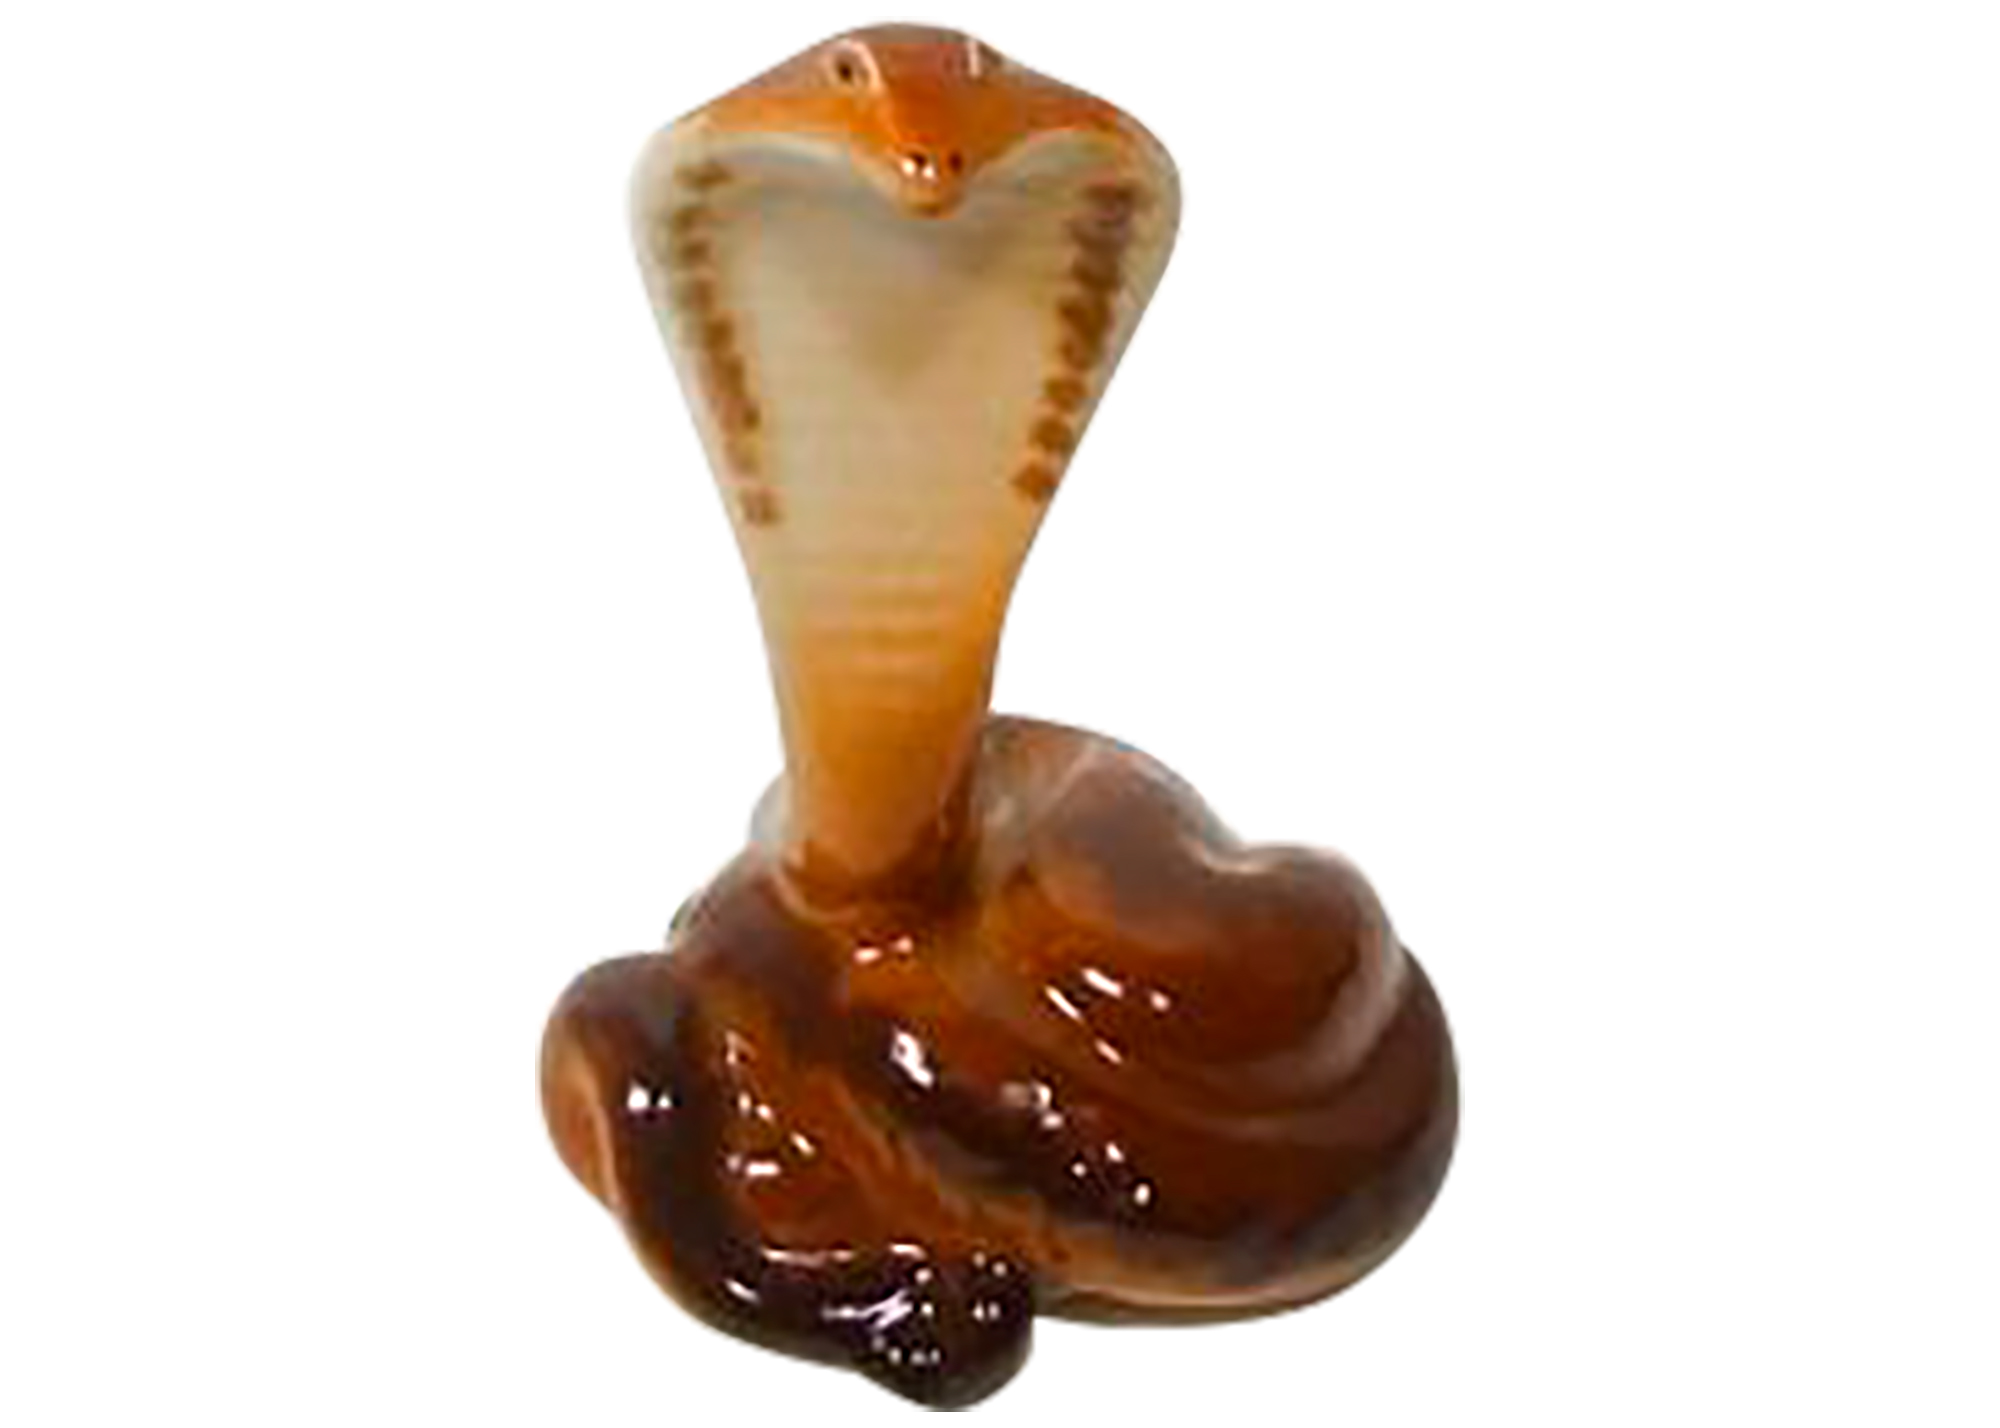 Buy Small Cobra Figurine at GoldenCockerel.com